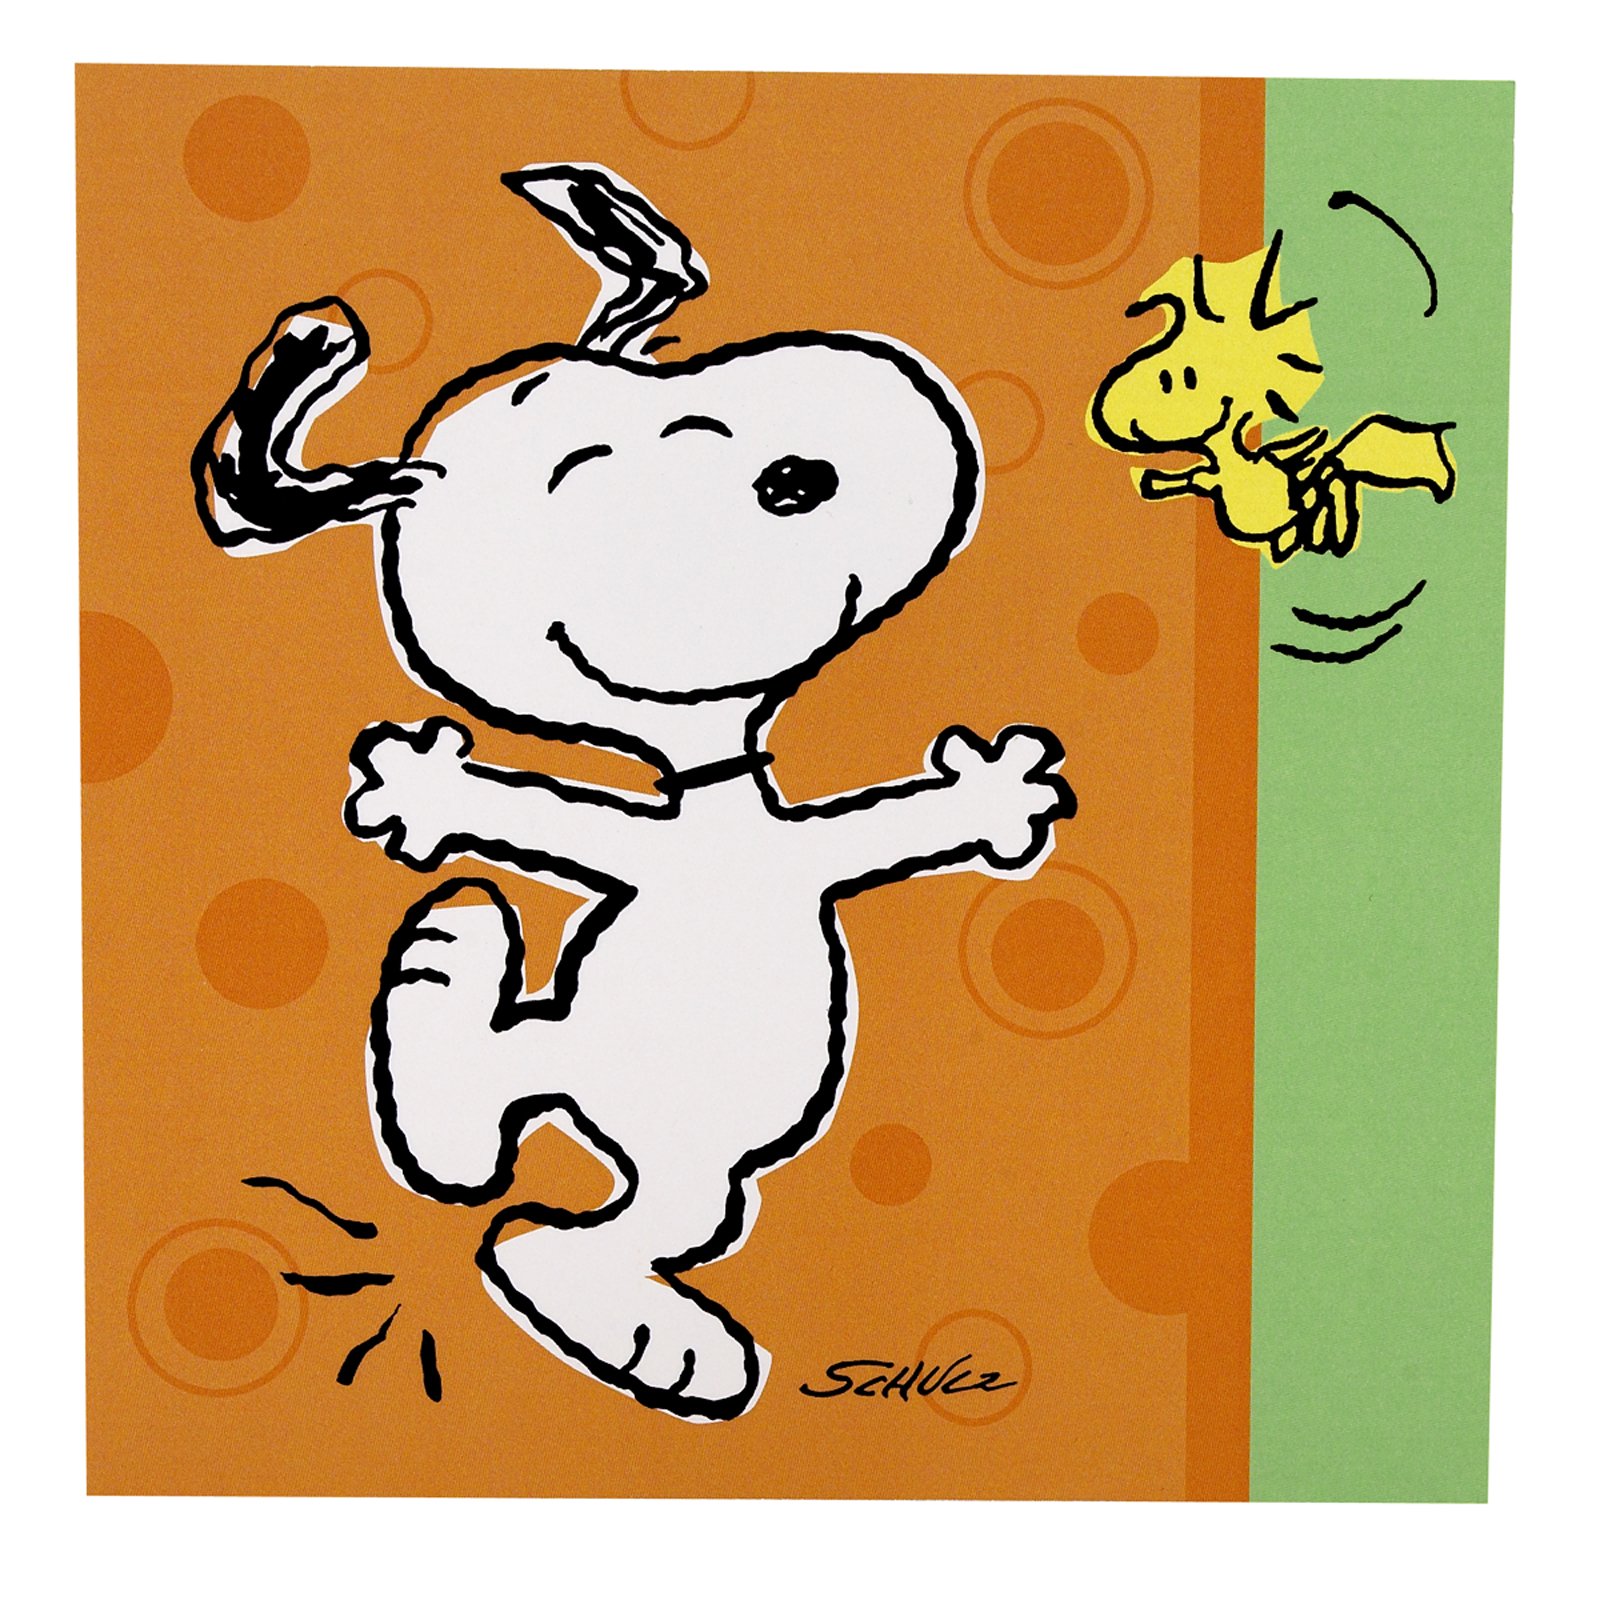 Snoopy Dancing Wallpaper Top Pictures Gallery Online